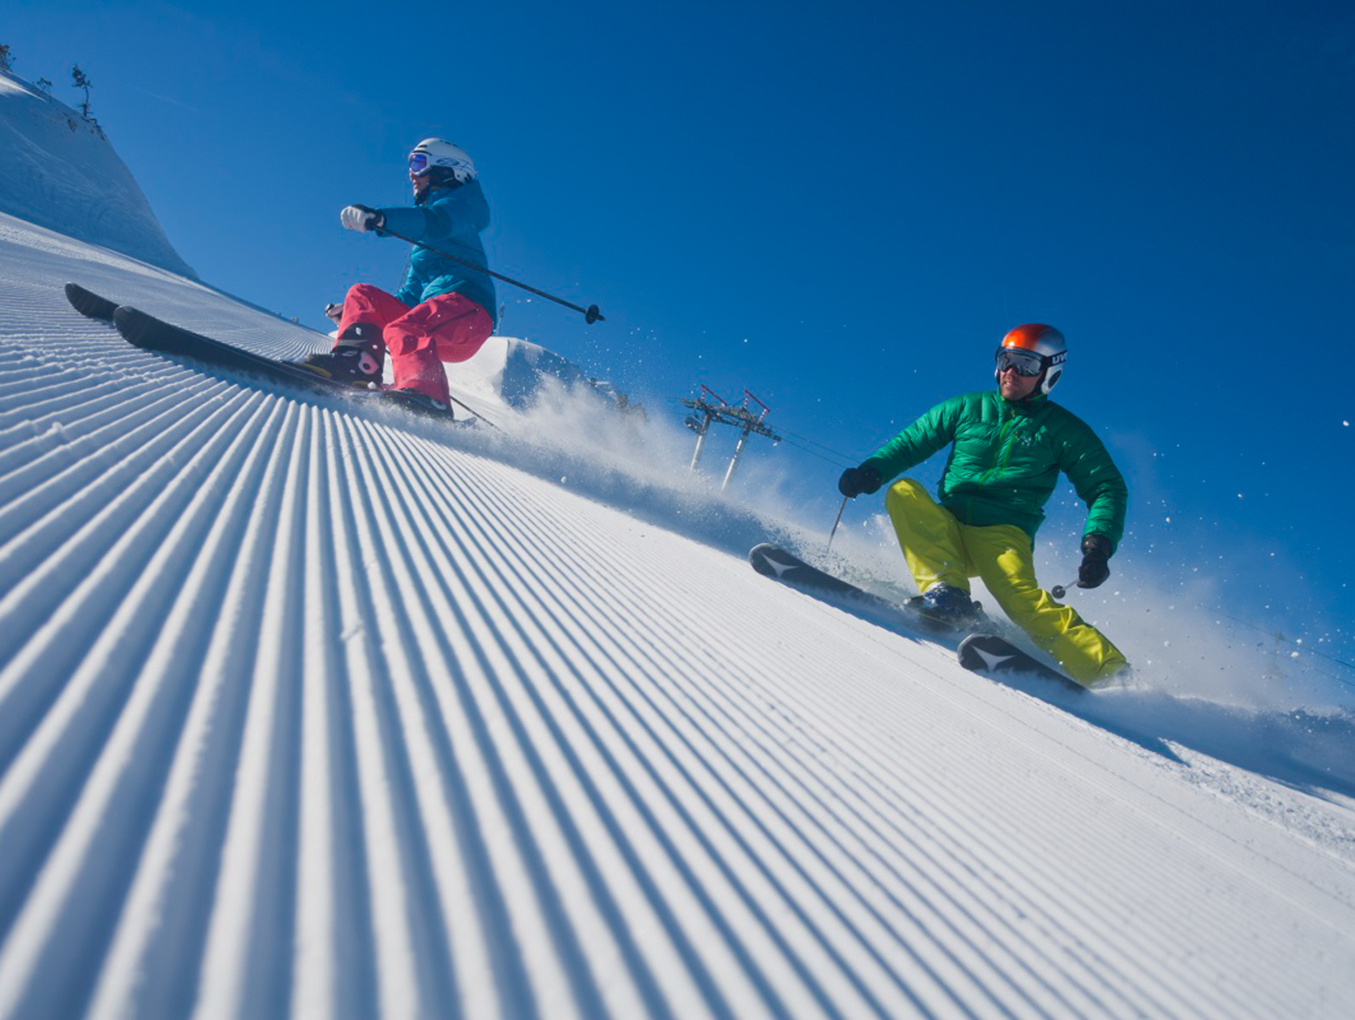 "Ski amadé - made my day"